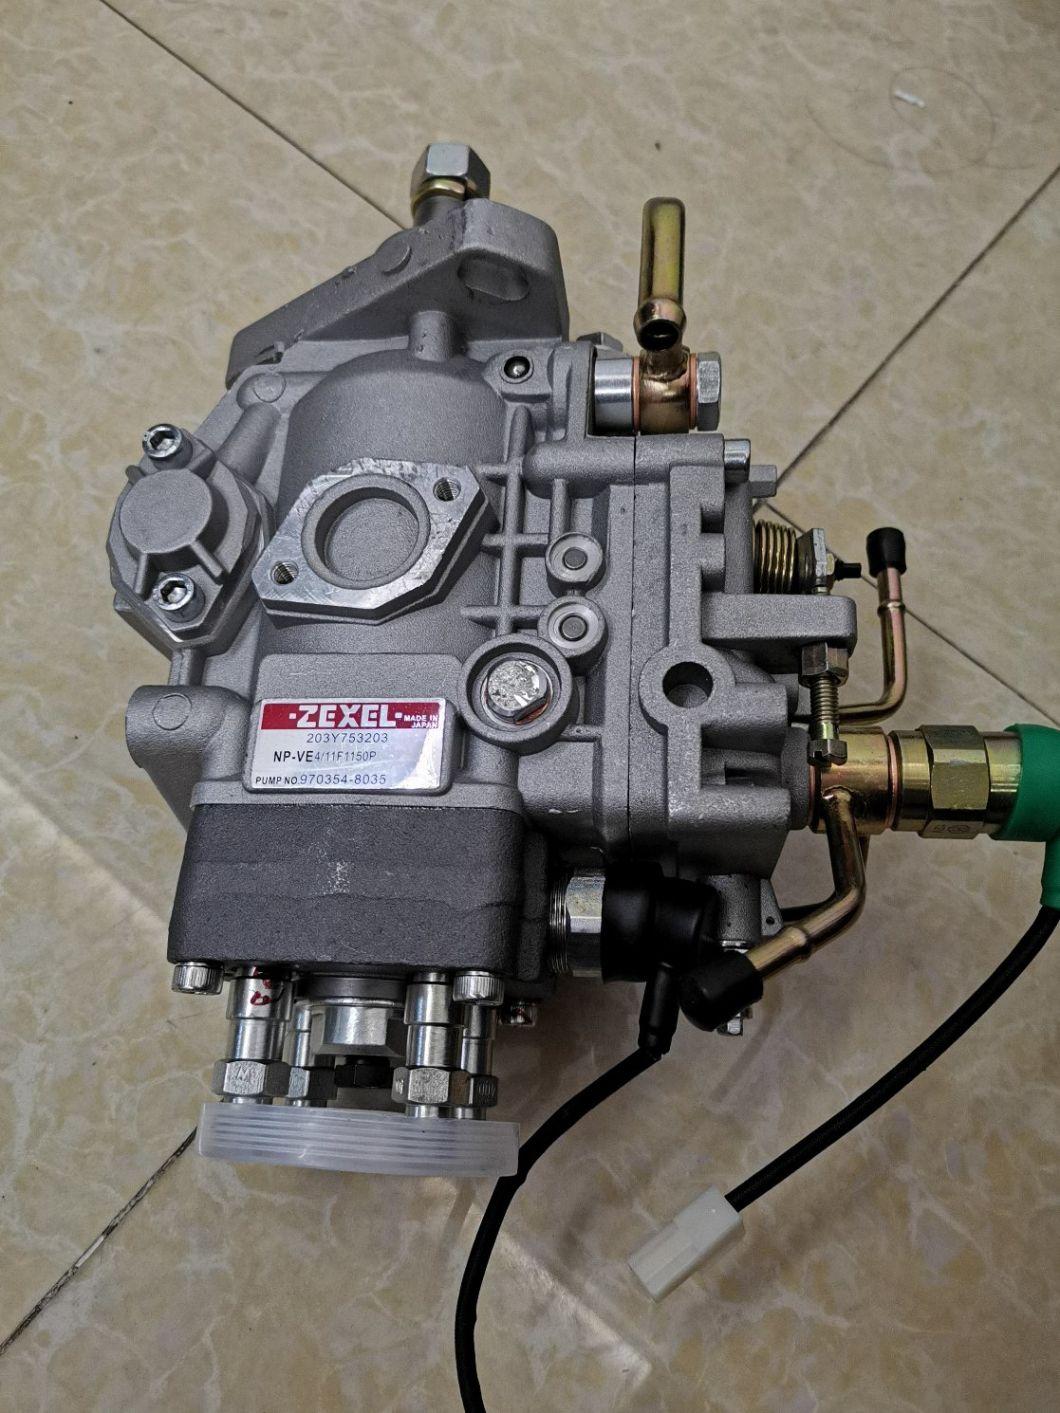 Fuel Injection Pump Fits for Isuzu Engine C240 4jb1 4jai 4gj1 4jg2 6bd1 4bd1 6bb1 6bg1